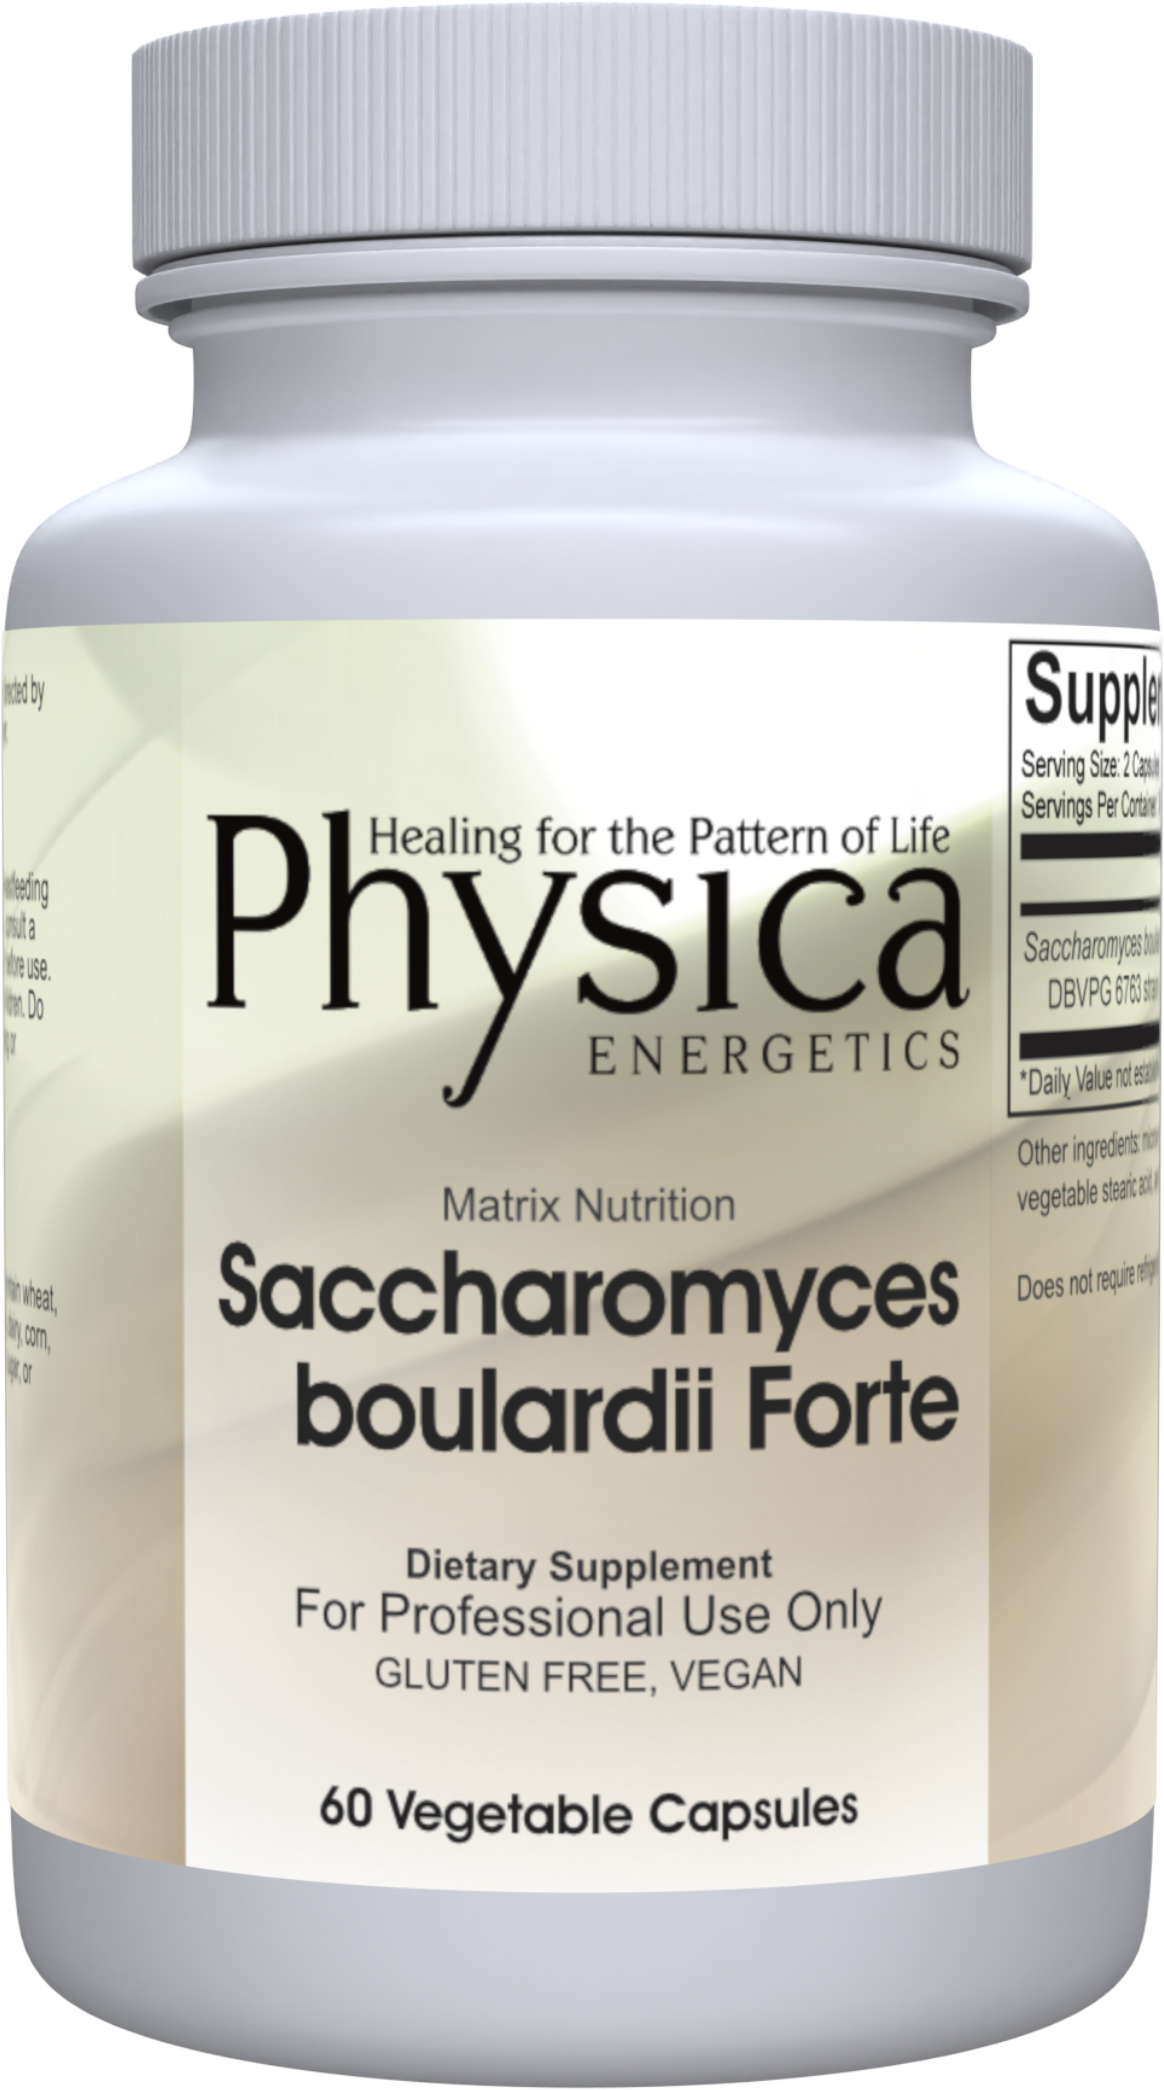 Saccharomyces boulardii Forte